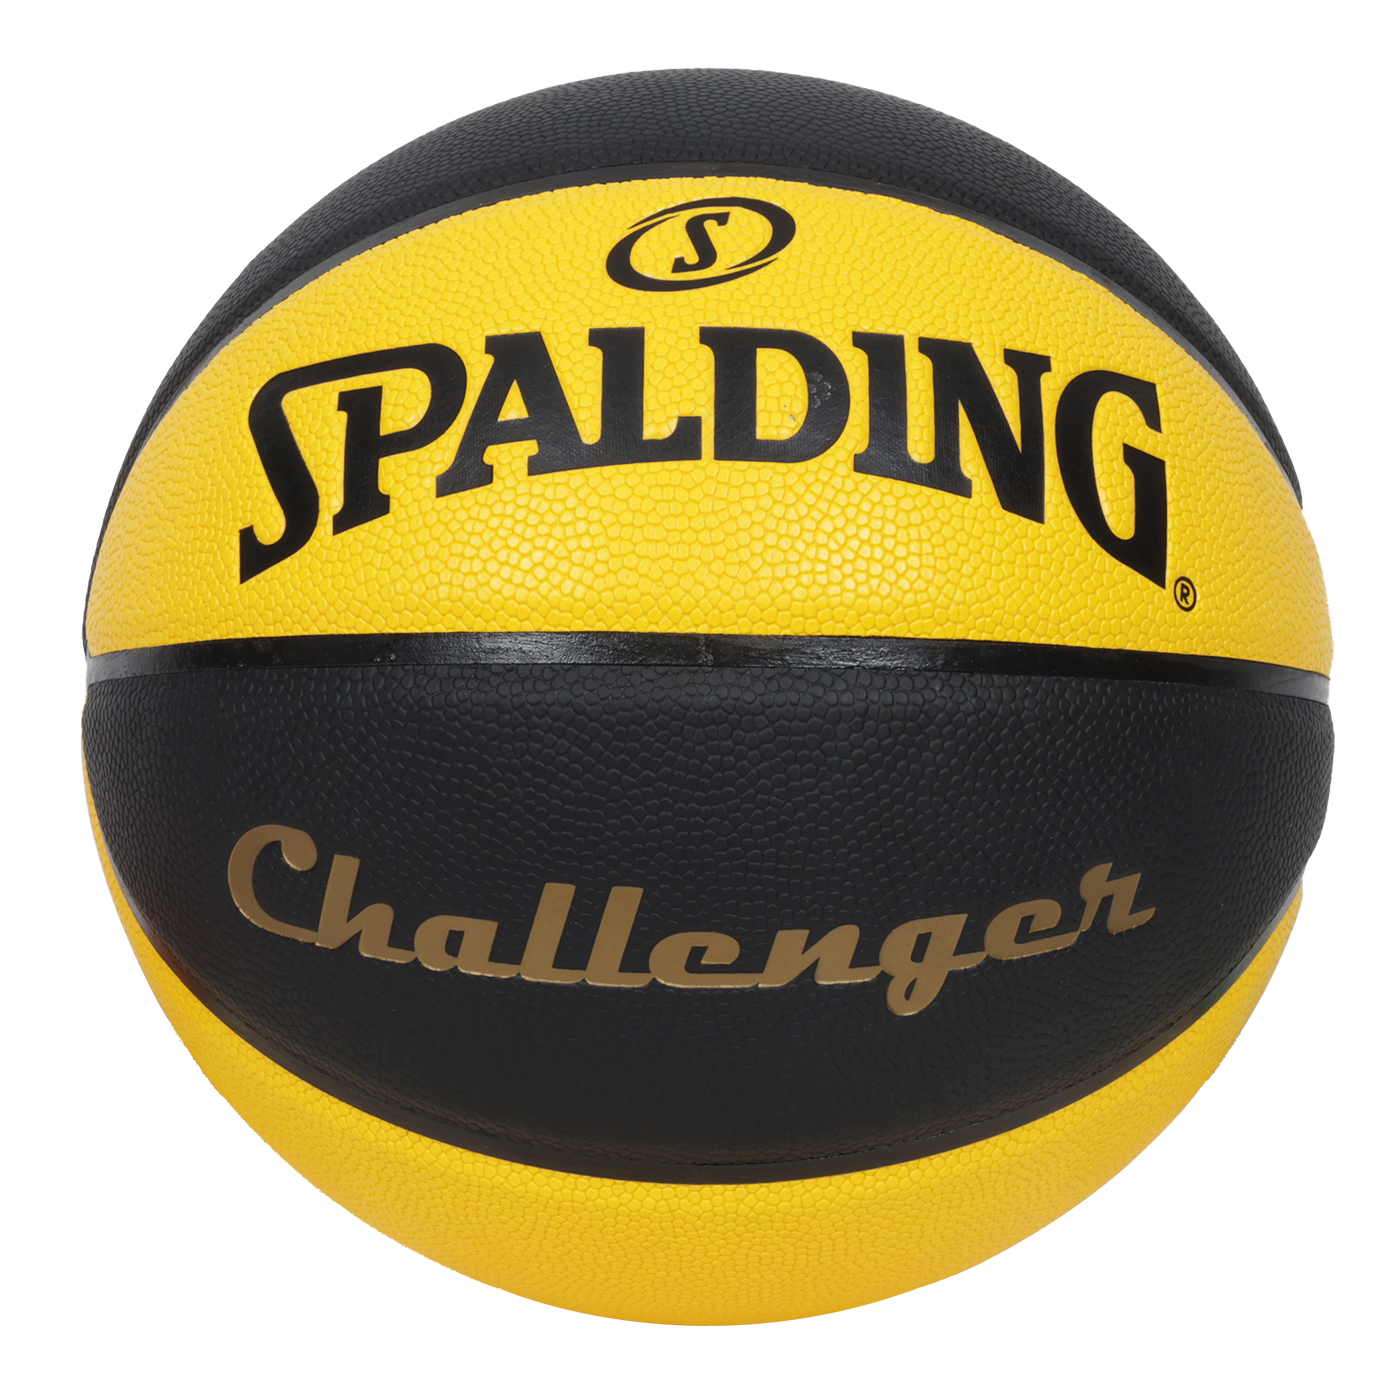 SPALDING Challenger系列#7合成皮籃球  SPB1132A7